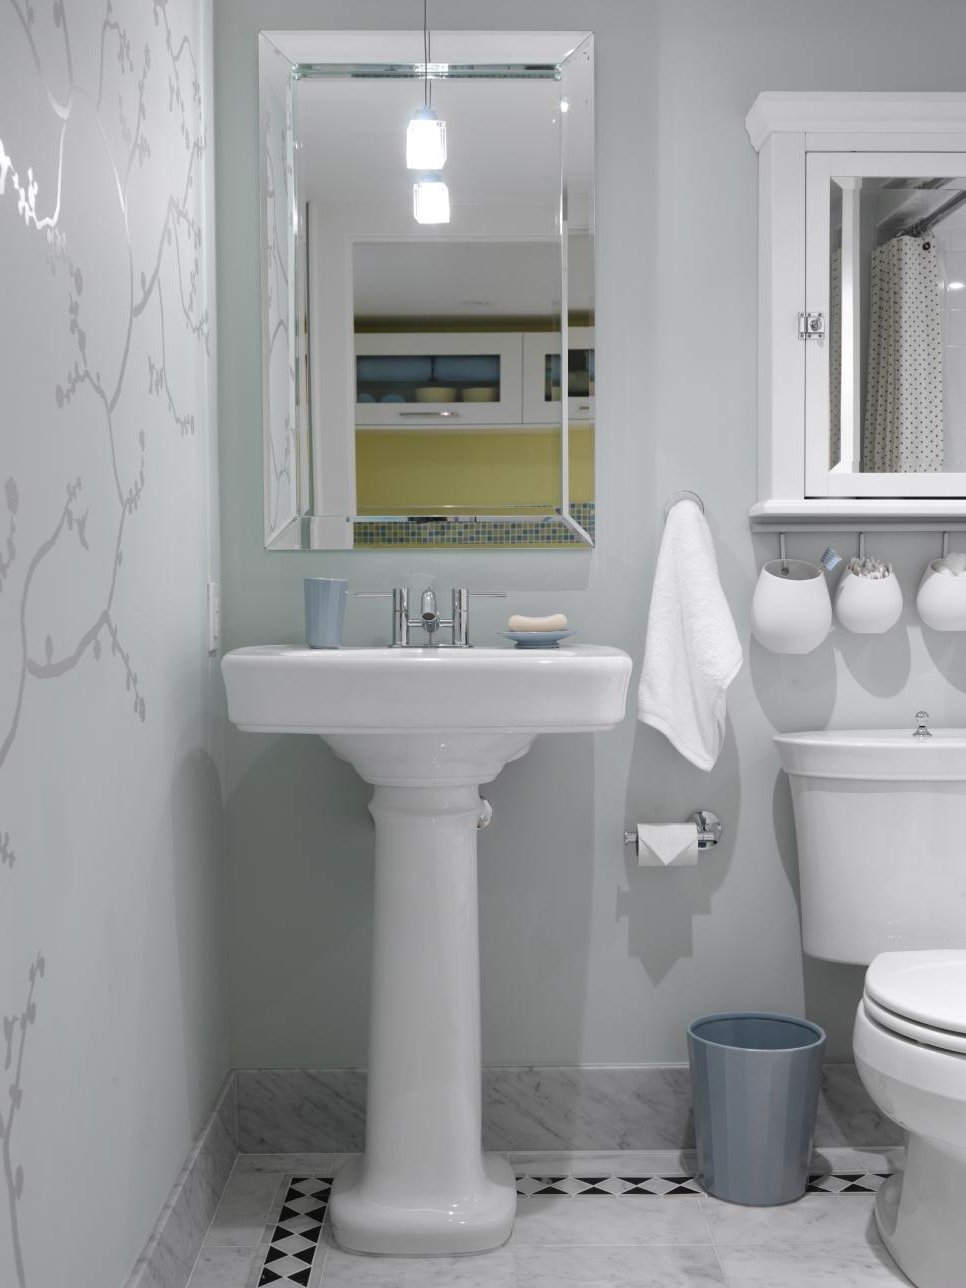 20 Small Bathroom Design Ideas Hgtv - HomeDecorish